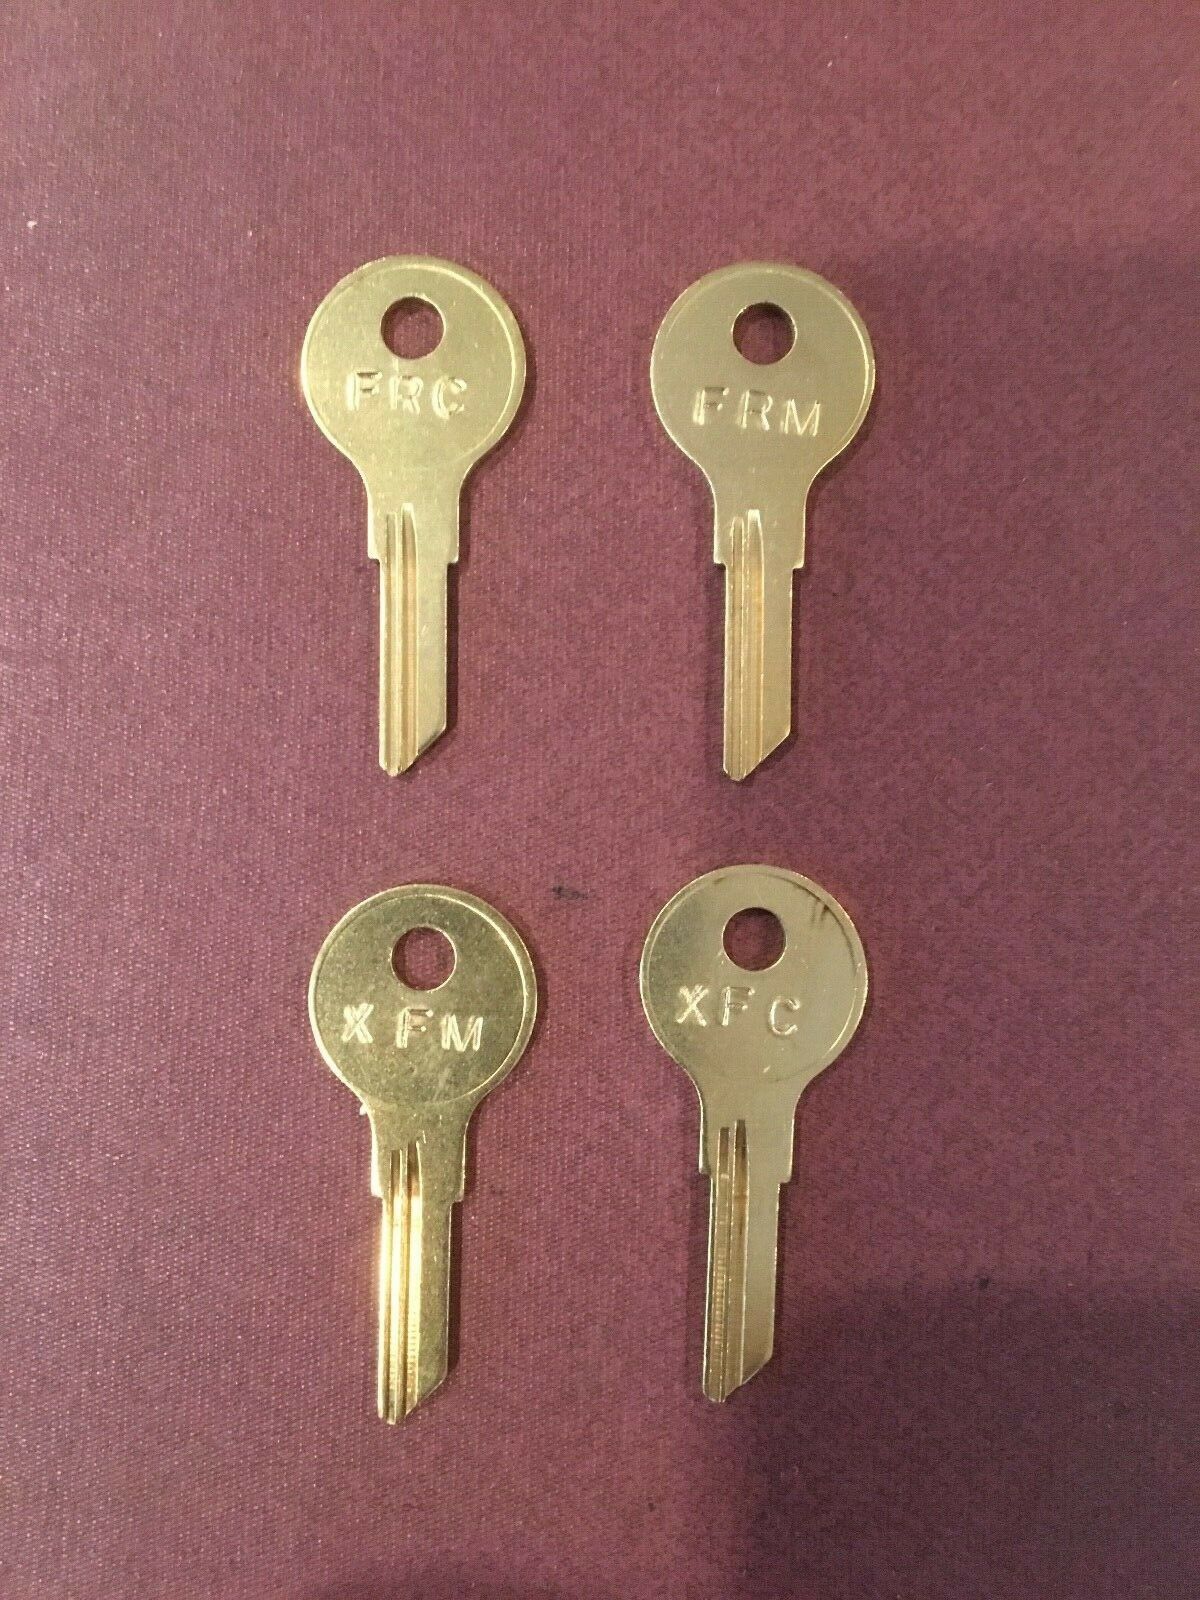 Steelcase Keys ( Fr Or Xf ) Master Or Lock Core Removal - Herman Miller, Hon